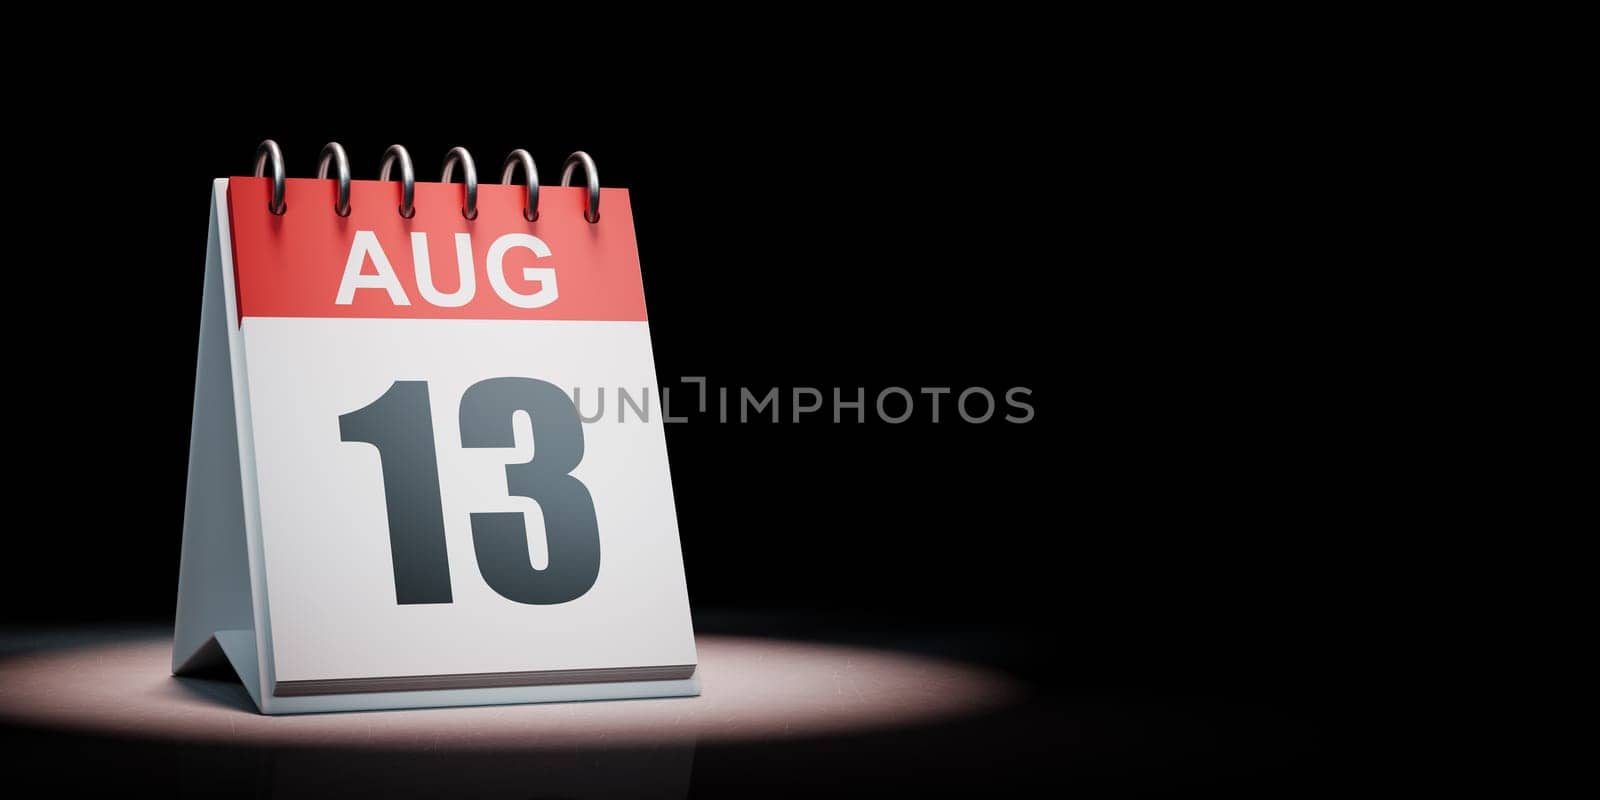 August 13 Calendar Spotlighted on Black Background by make